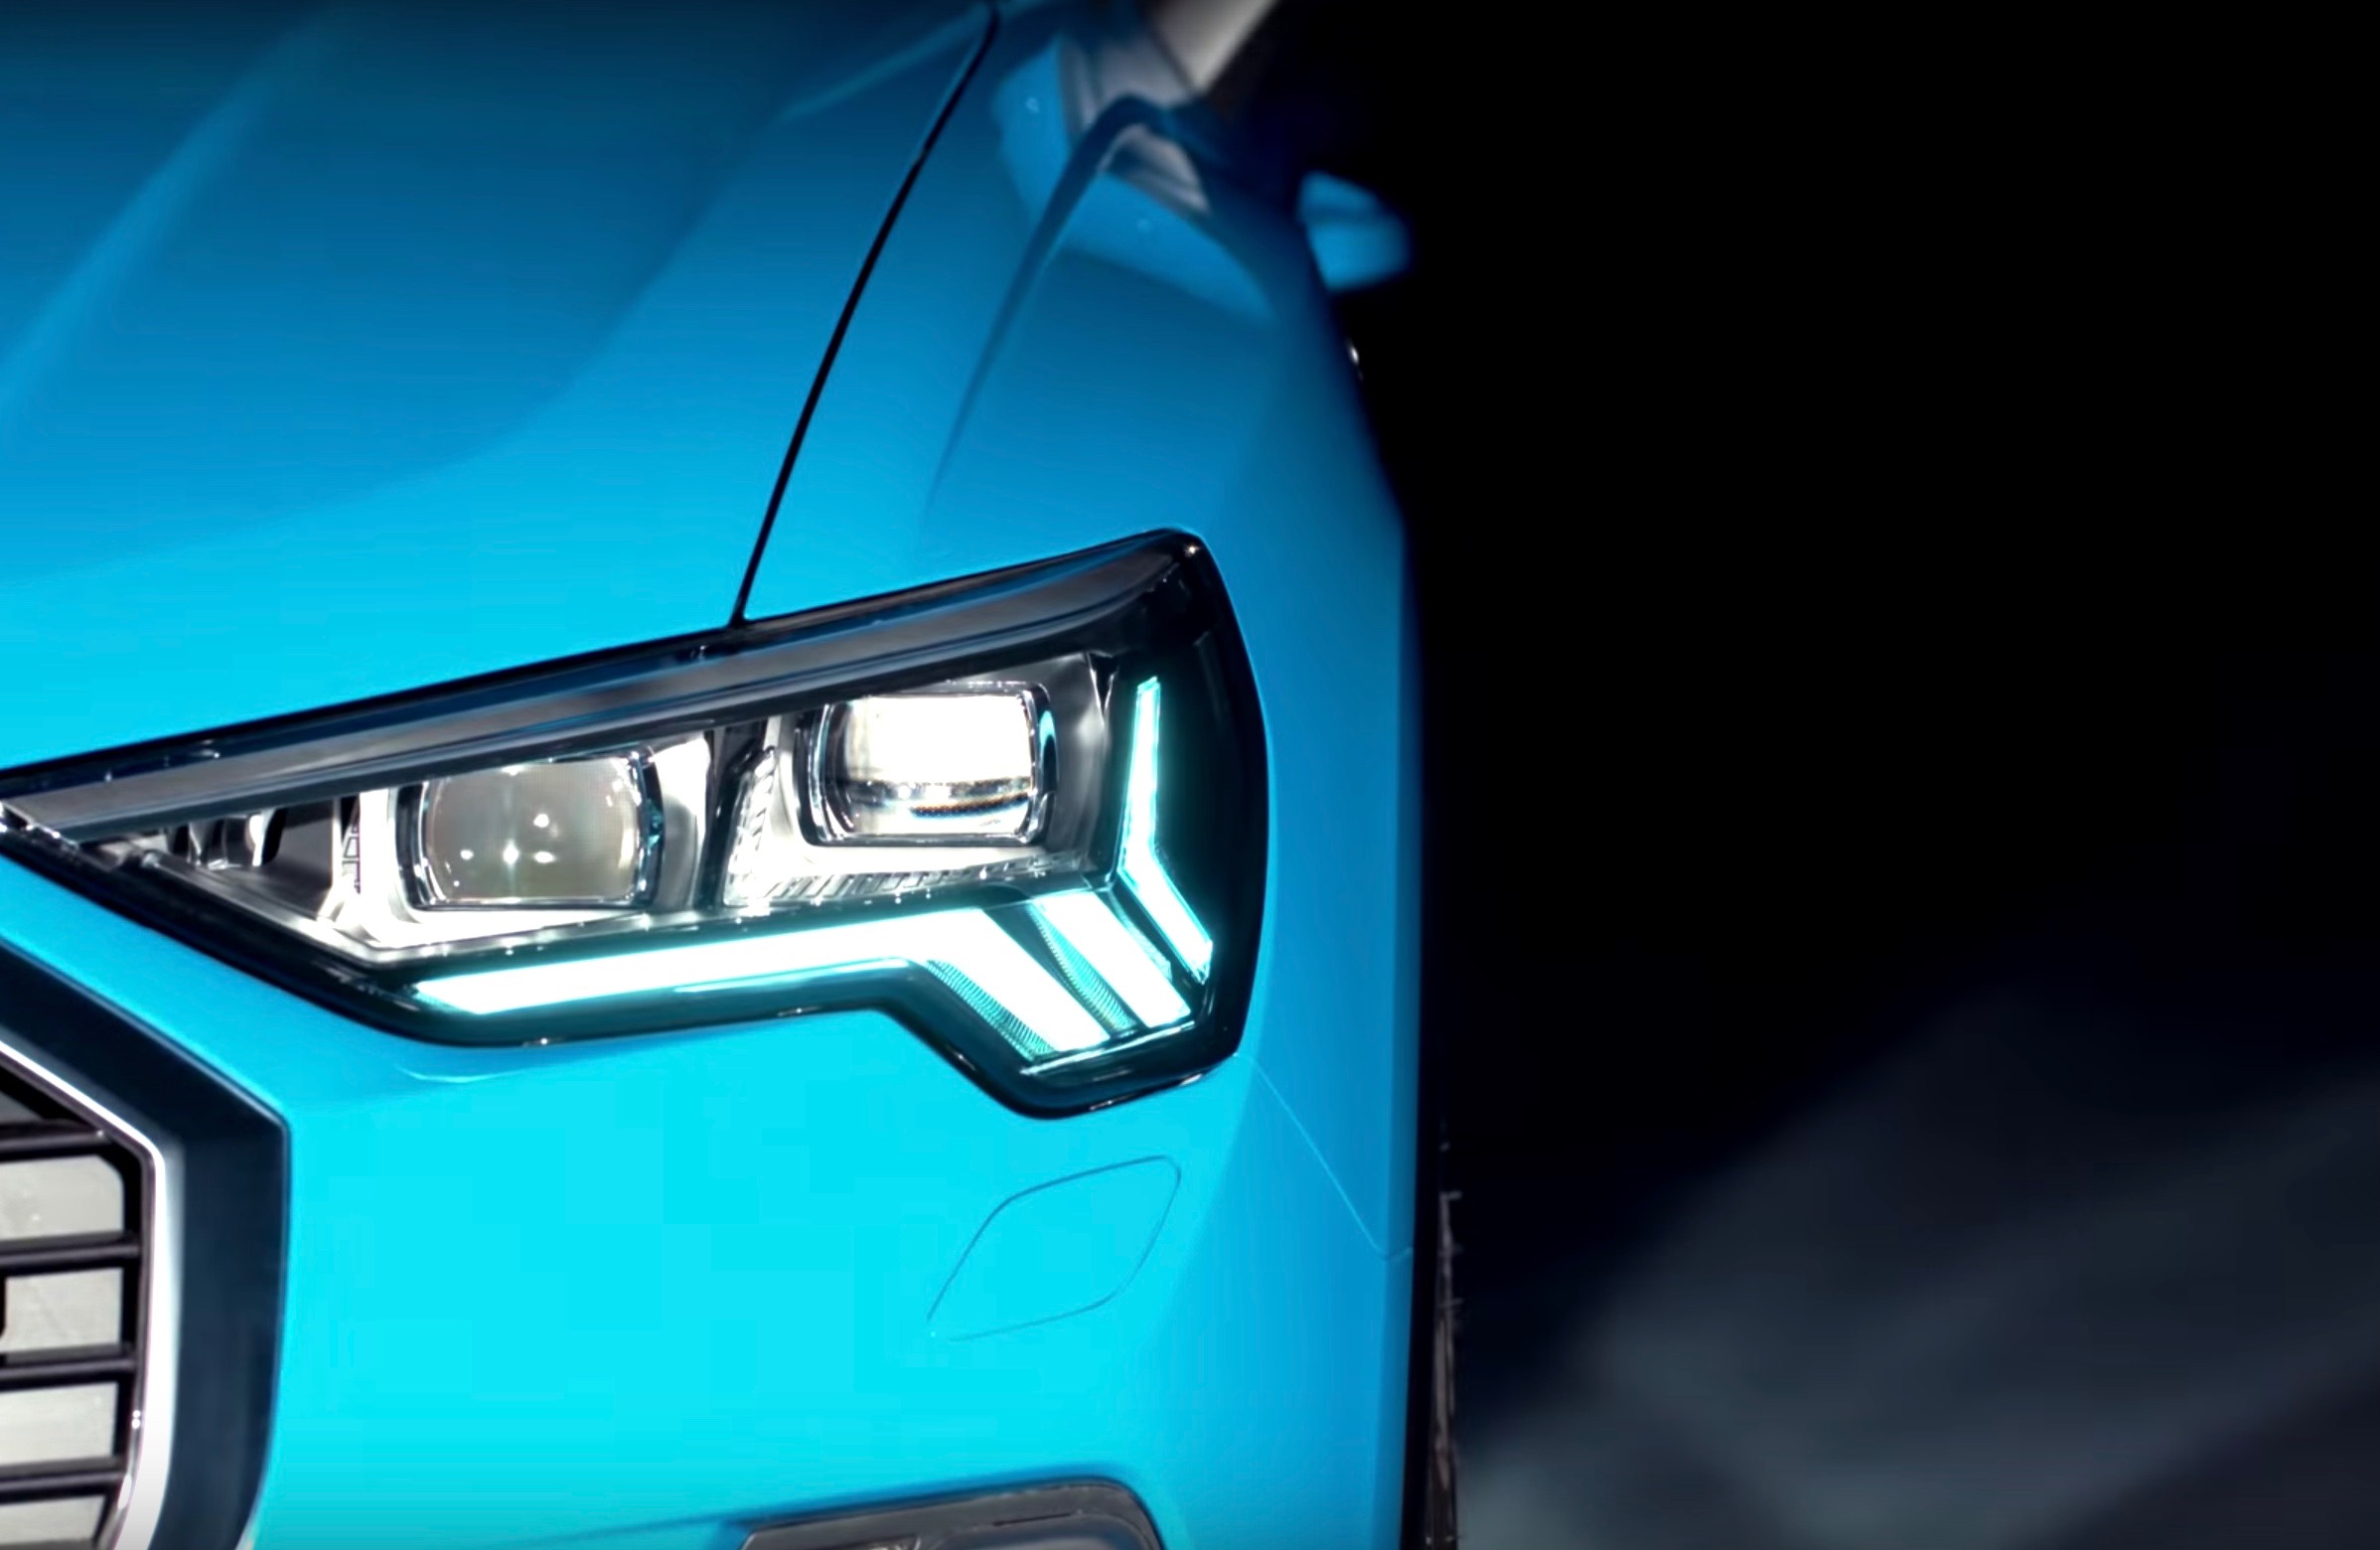 2019 Audi Q3 preview, to switch to MQB platform (video)